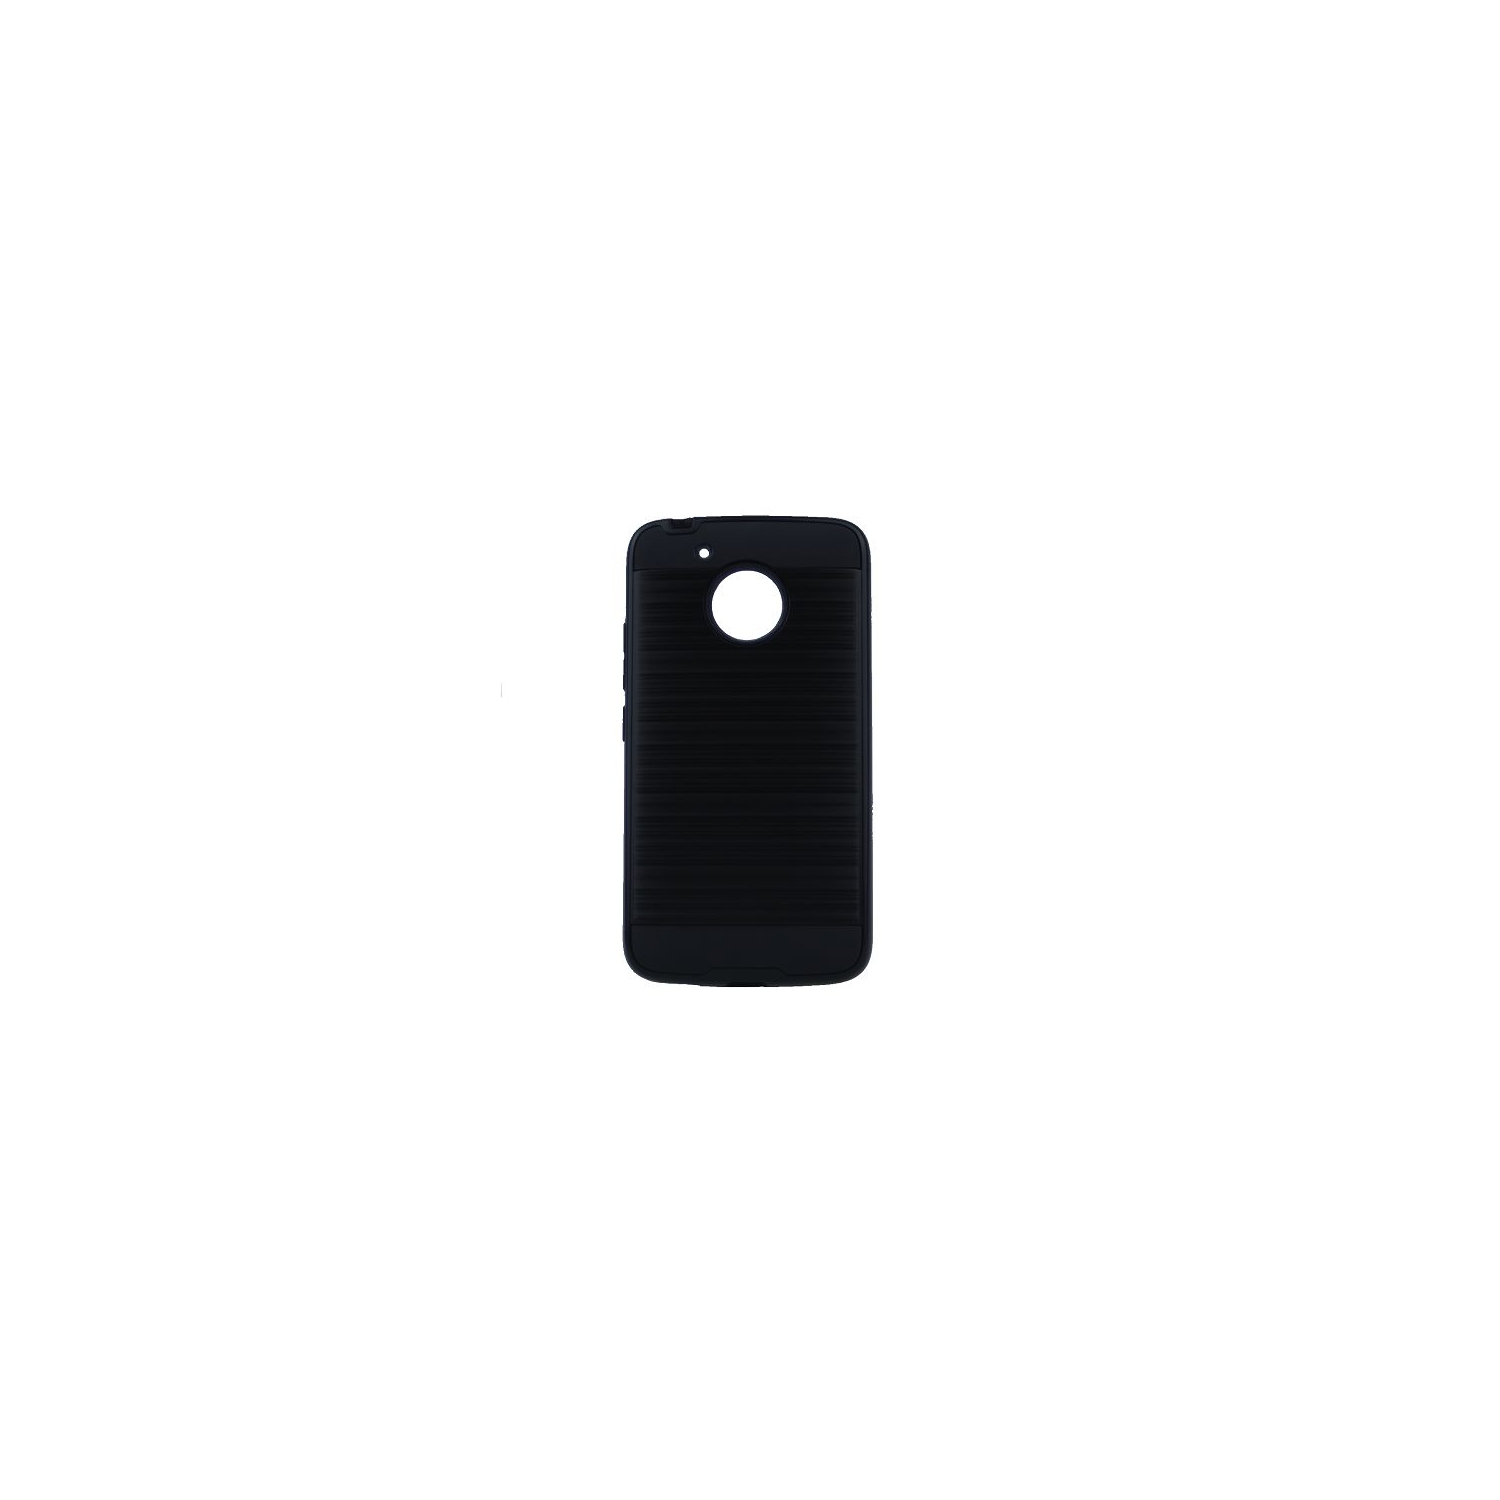 Moto G5 Plus Blush Texture Hard Cover Case, Black